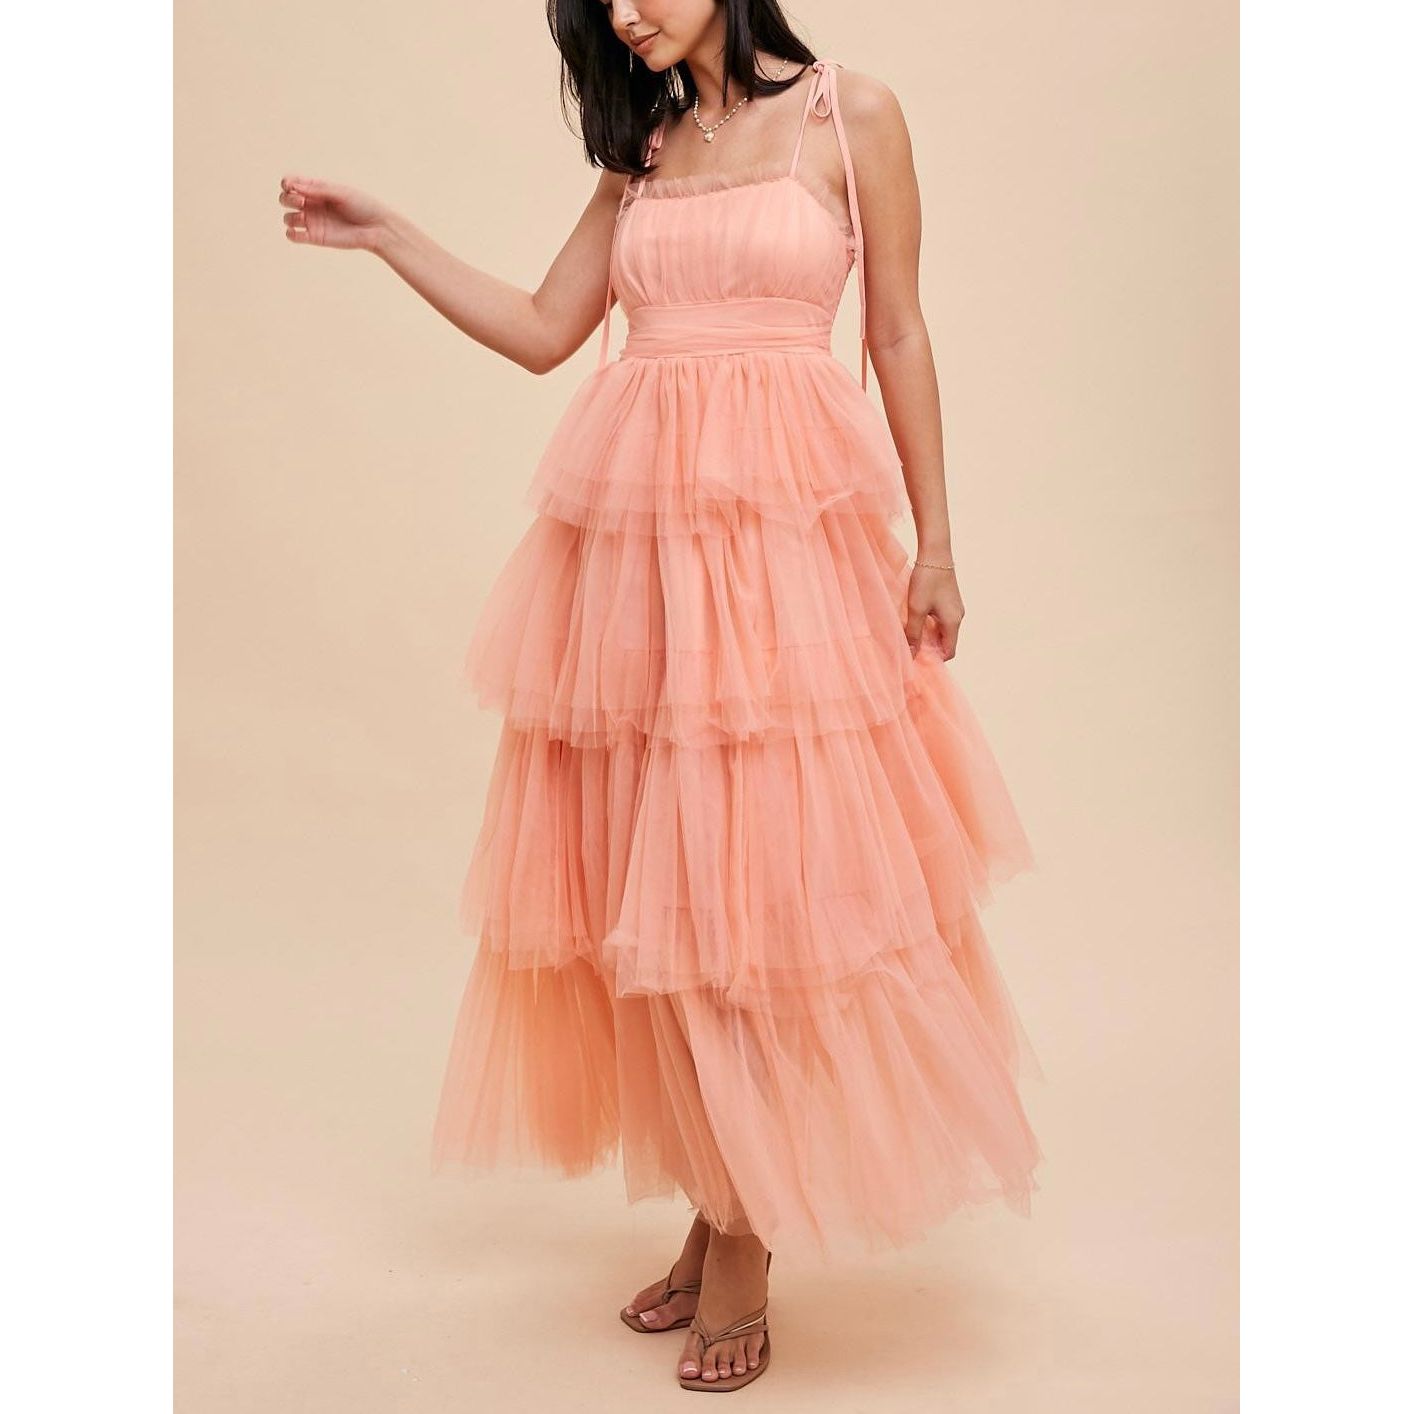 Alice Romantic Tiered Mesh Ruffled Dress - Peach